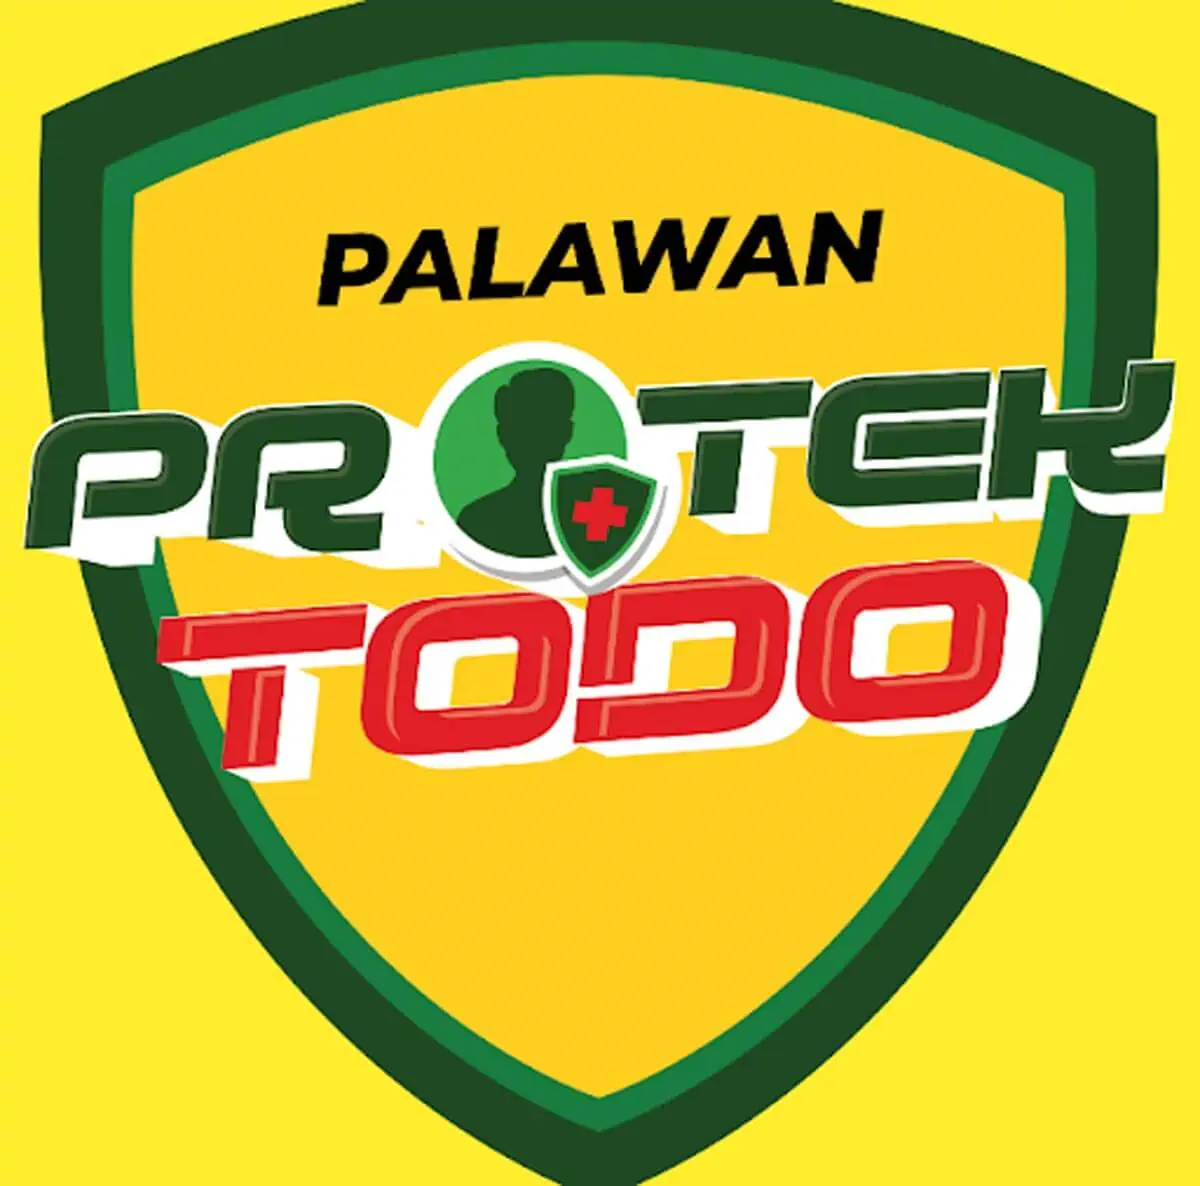 Palawan-Pawnshop-protektoto-logo